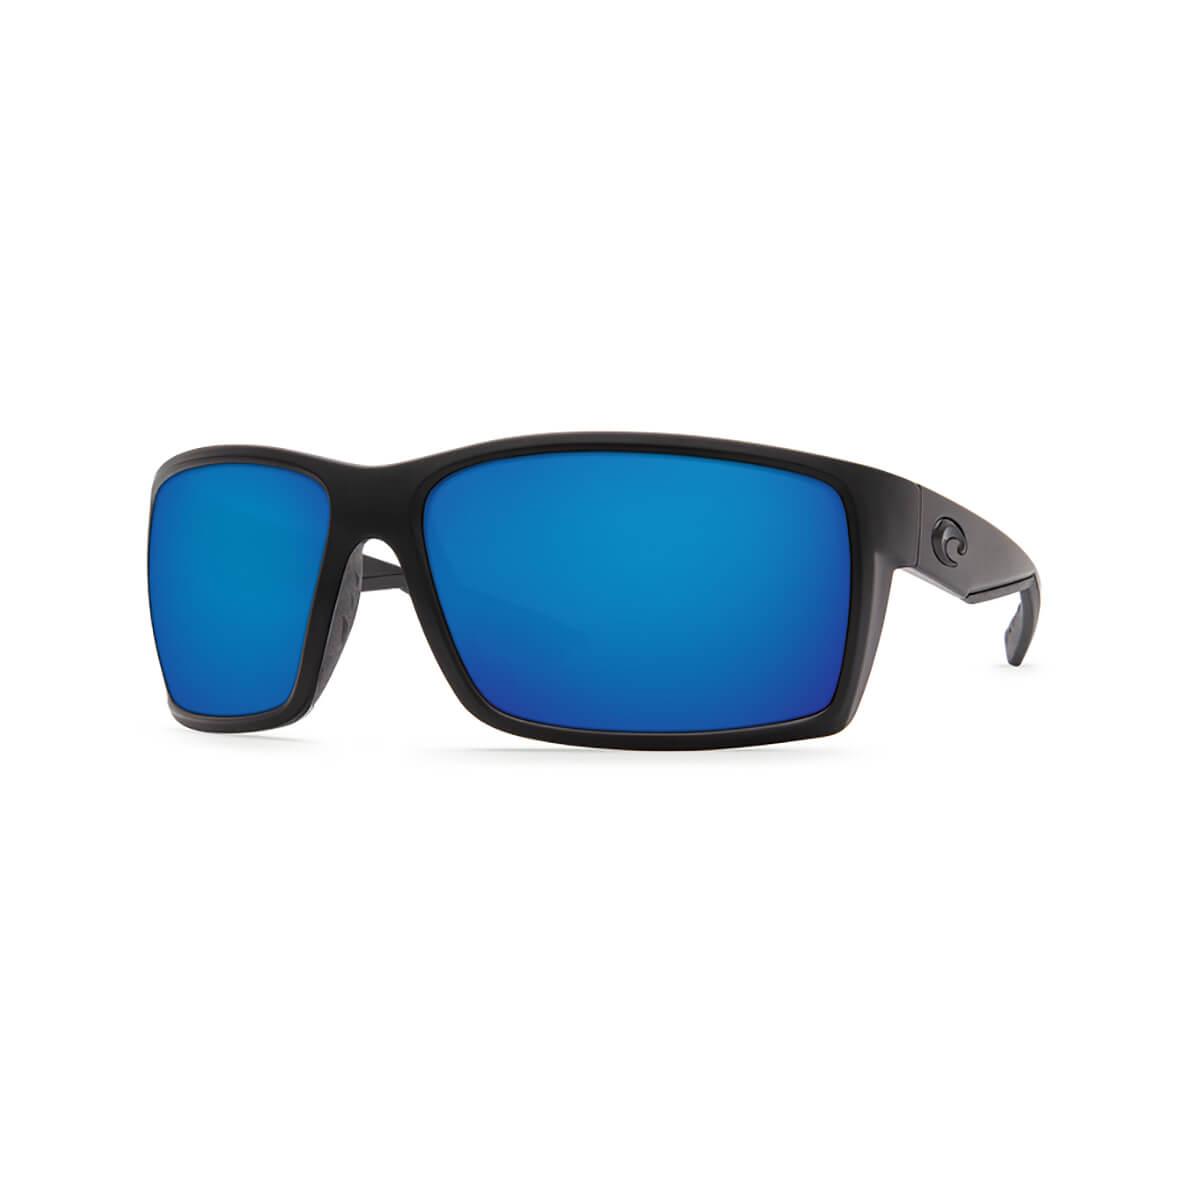  Reefton 580p Sunglasses - Polarized Plastic